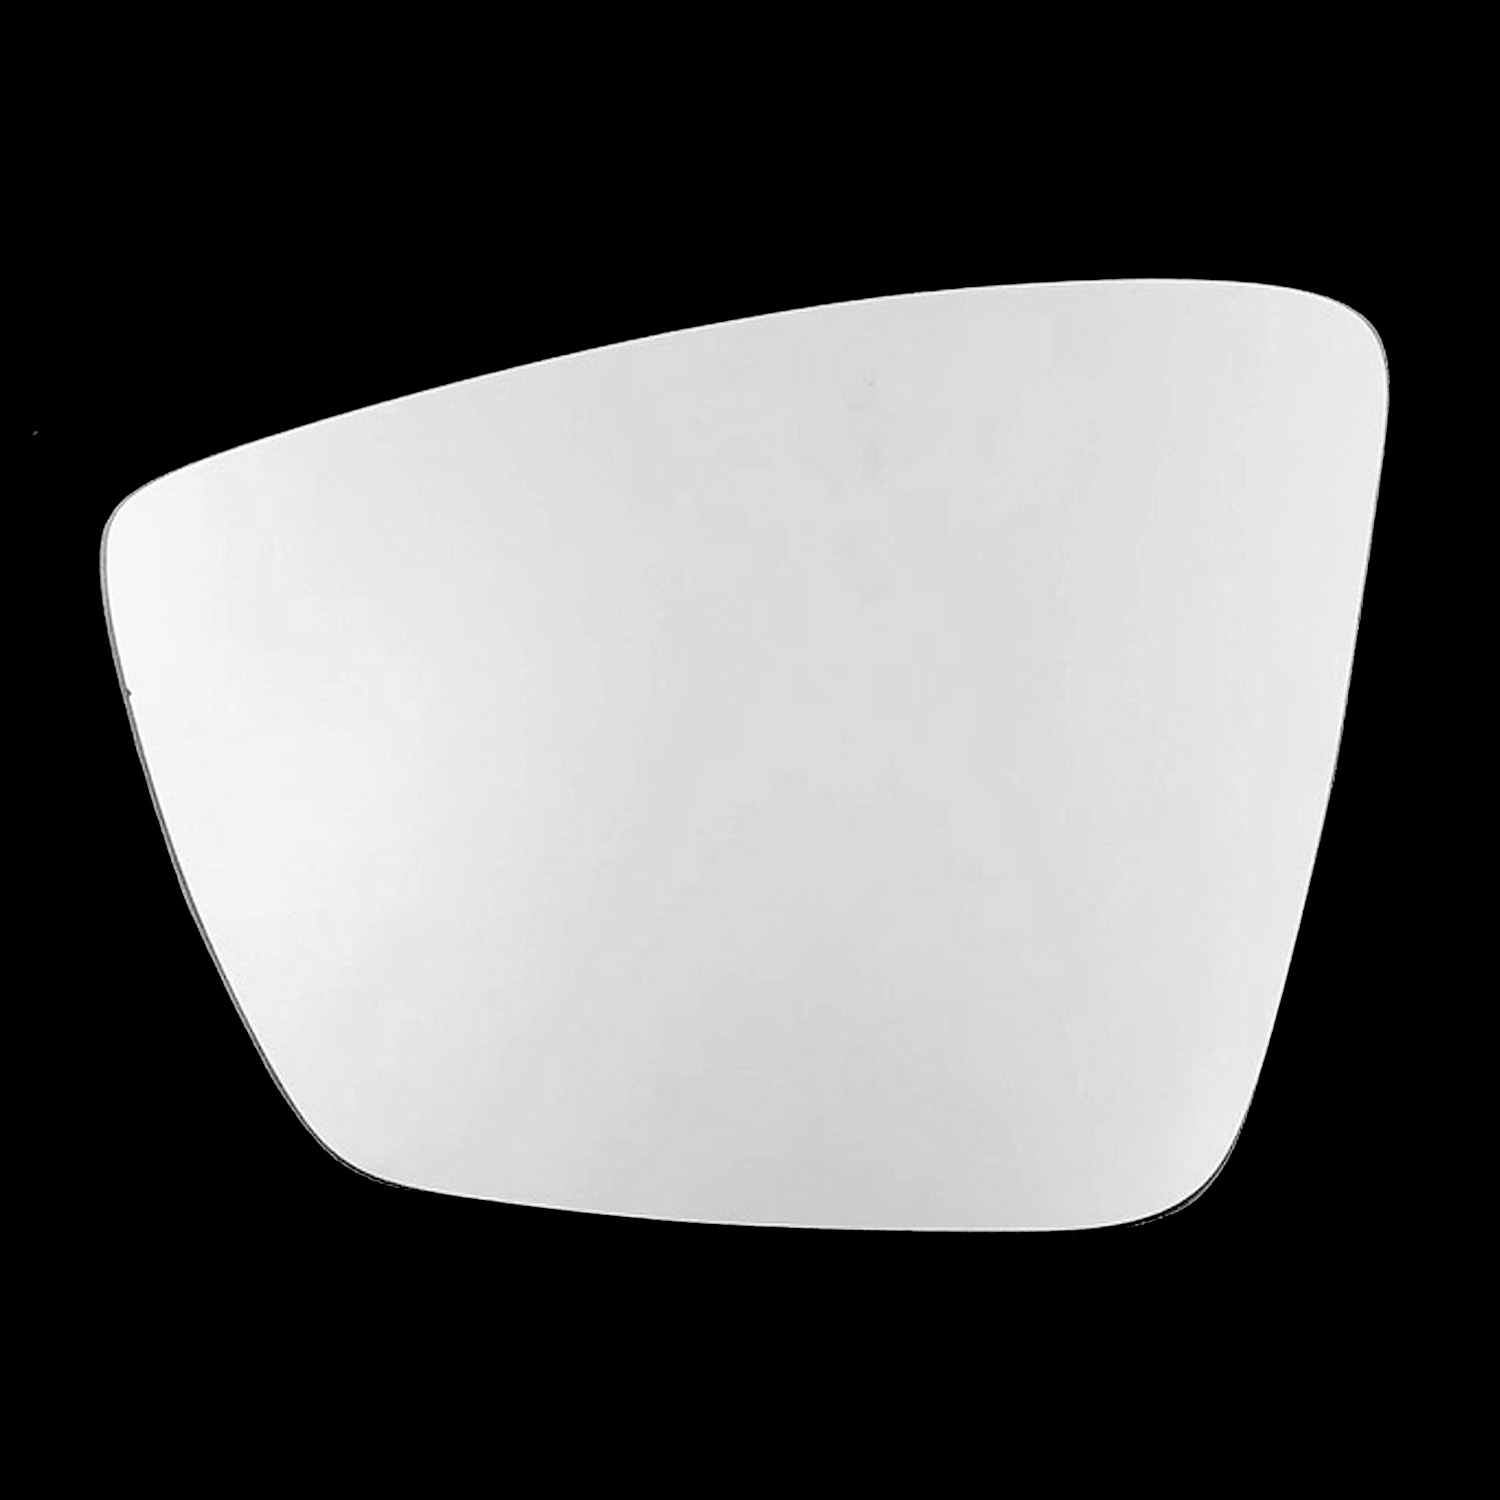 Skoda Karoq Wing Mirror Glass LEFT HAND ( UK Passenger Side ) 2017 to 2020 – Wide Angle Wing Mirror